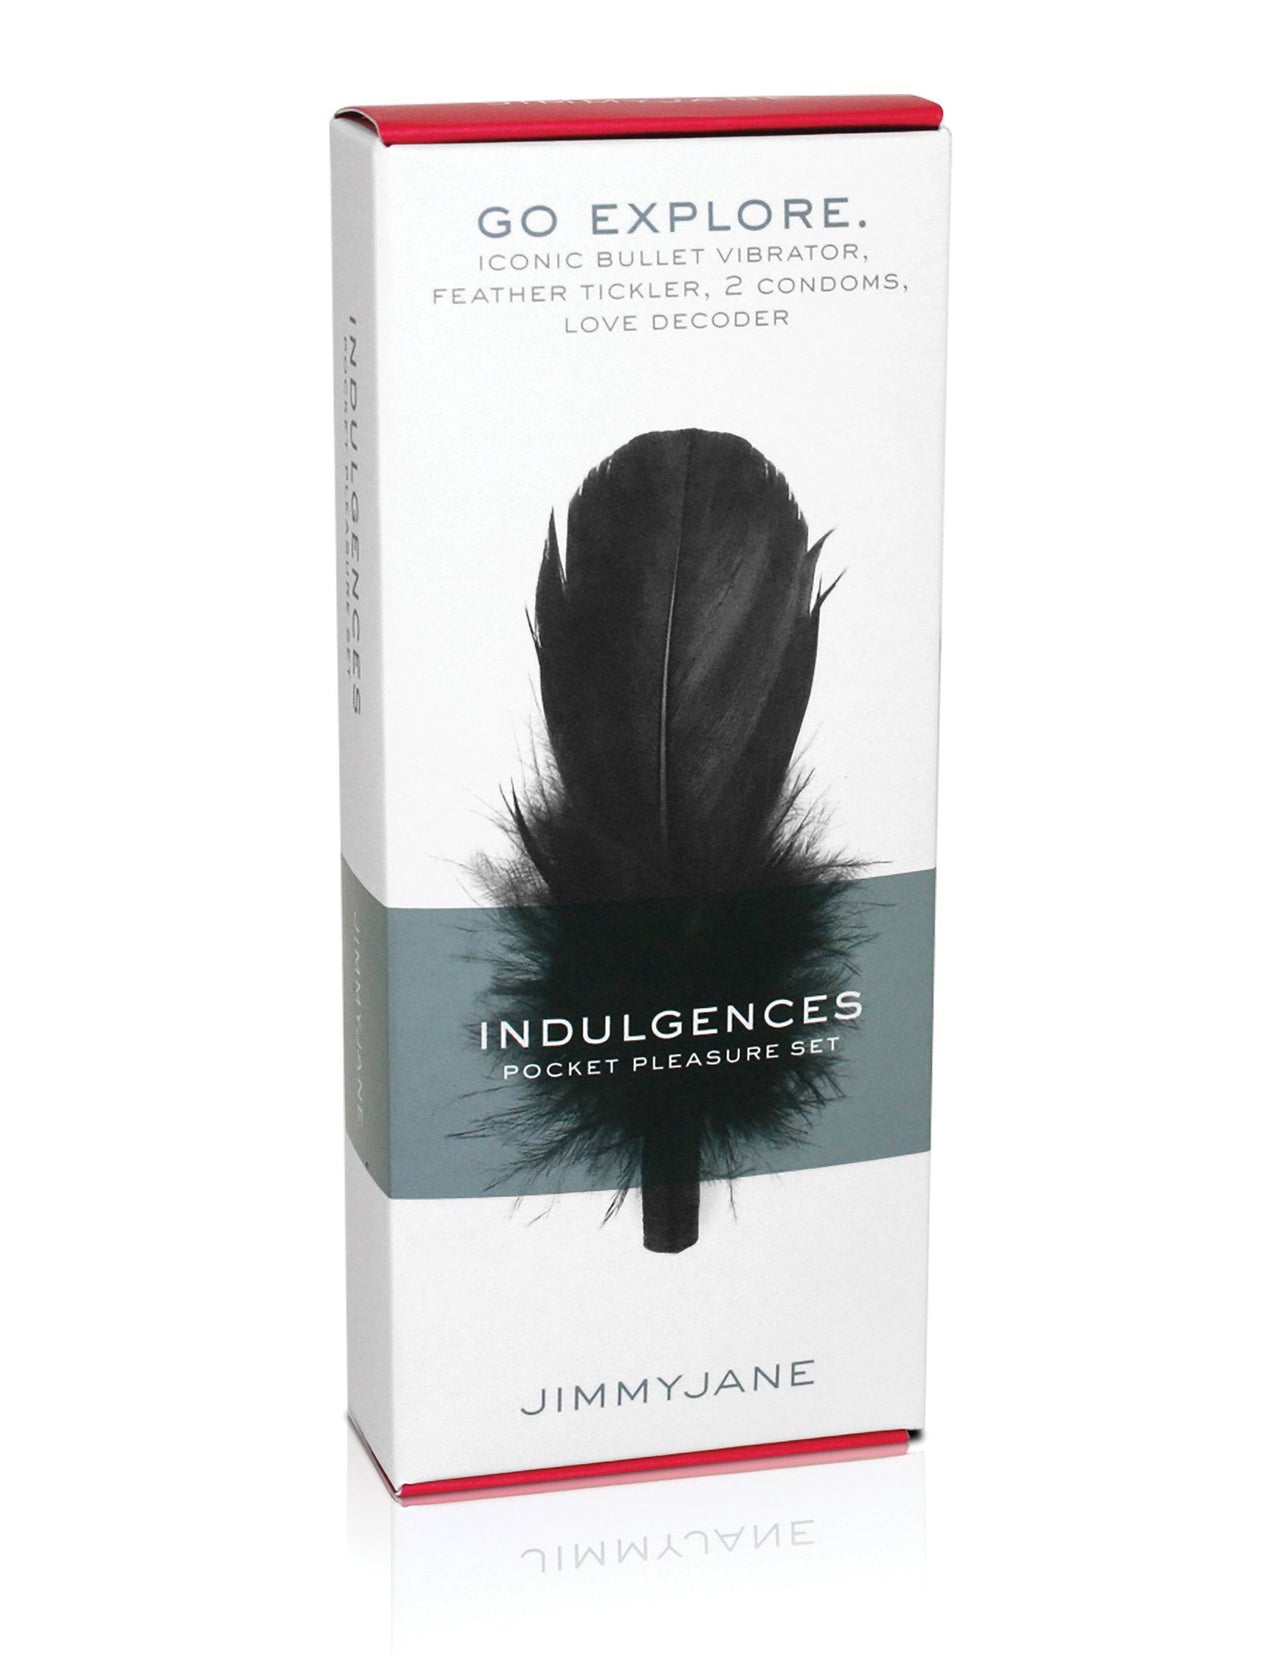 JimmyJane - Indulgences - Go Explore - Pocket Pleasure Set - Stag Shop